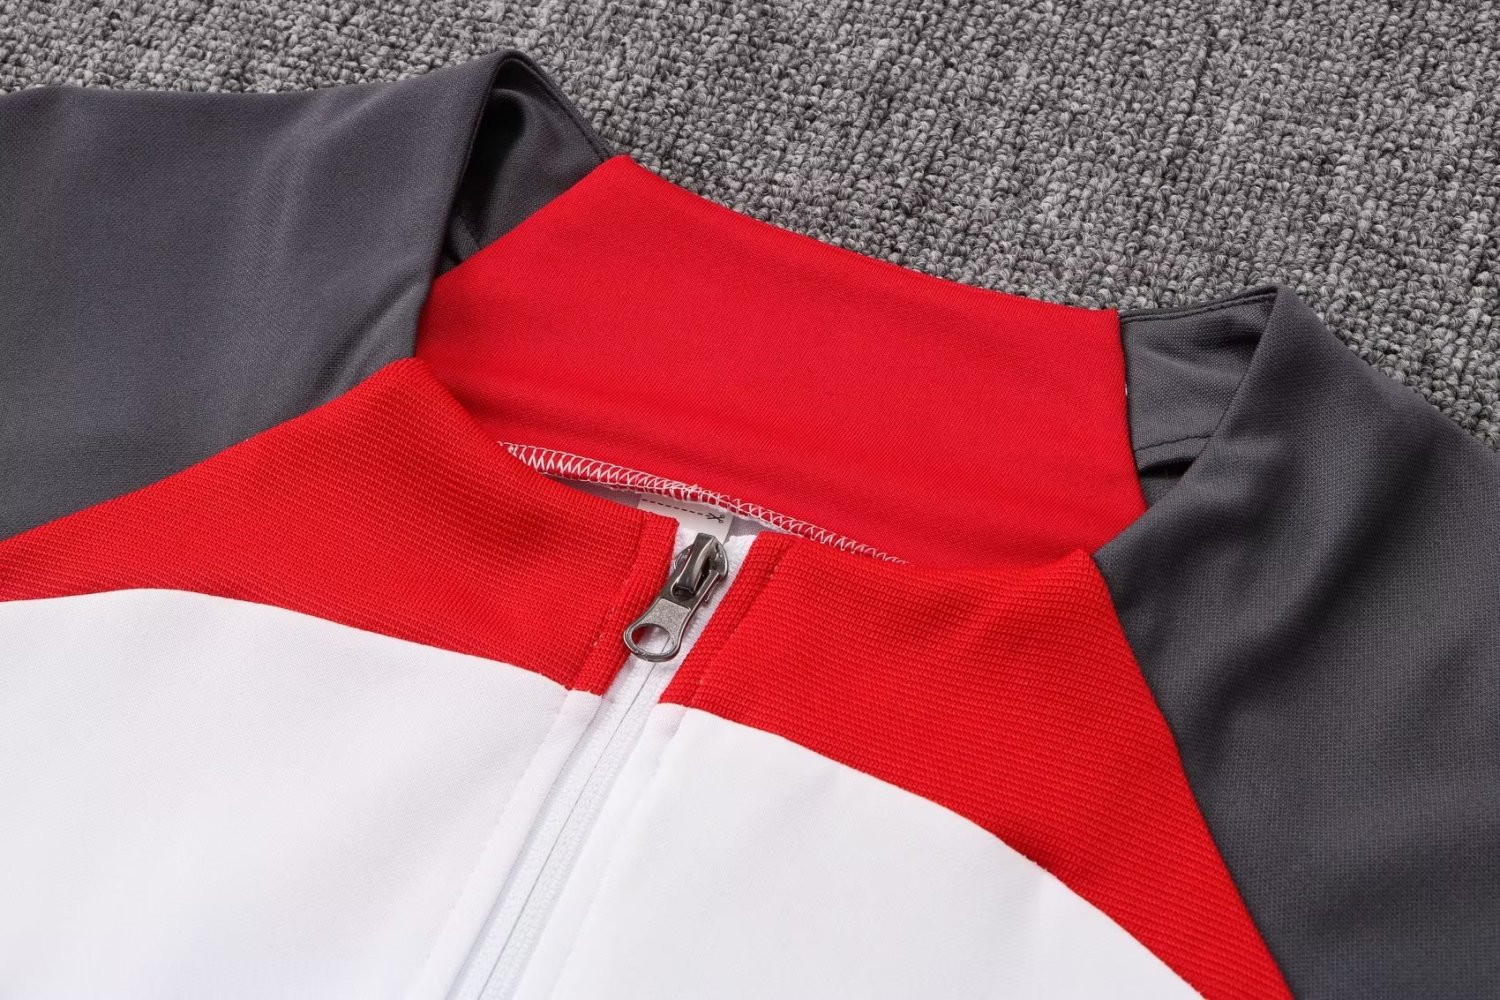 Liverpool Soccer Jacket + Pants Replica White 2022/23 Mens